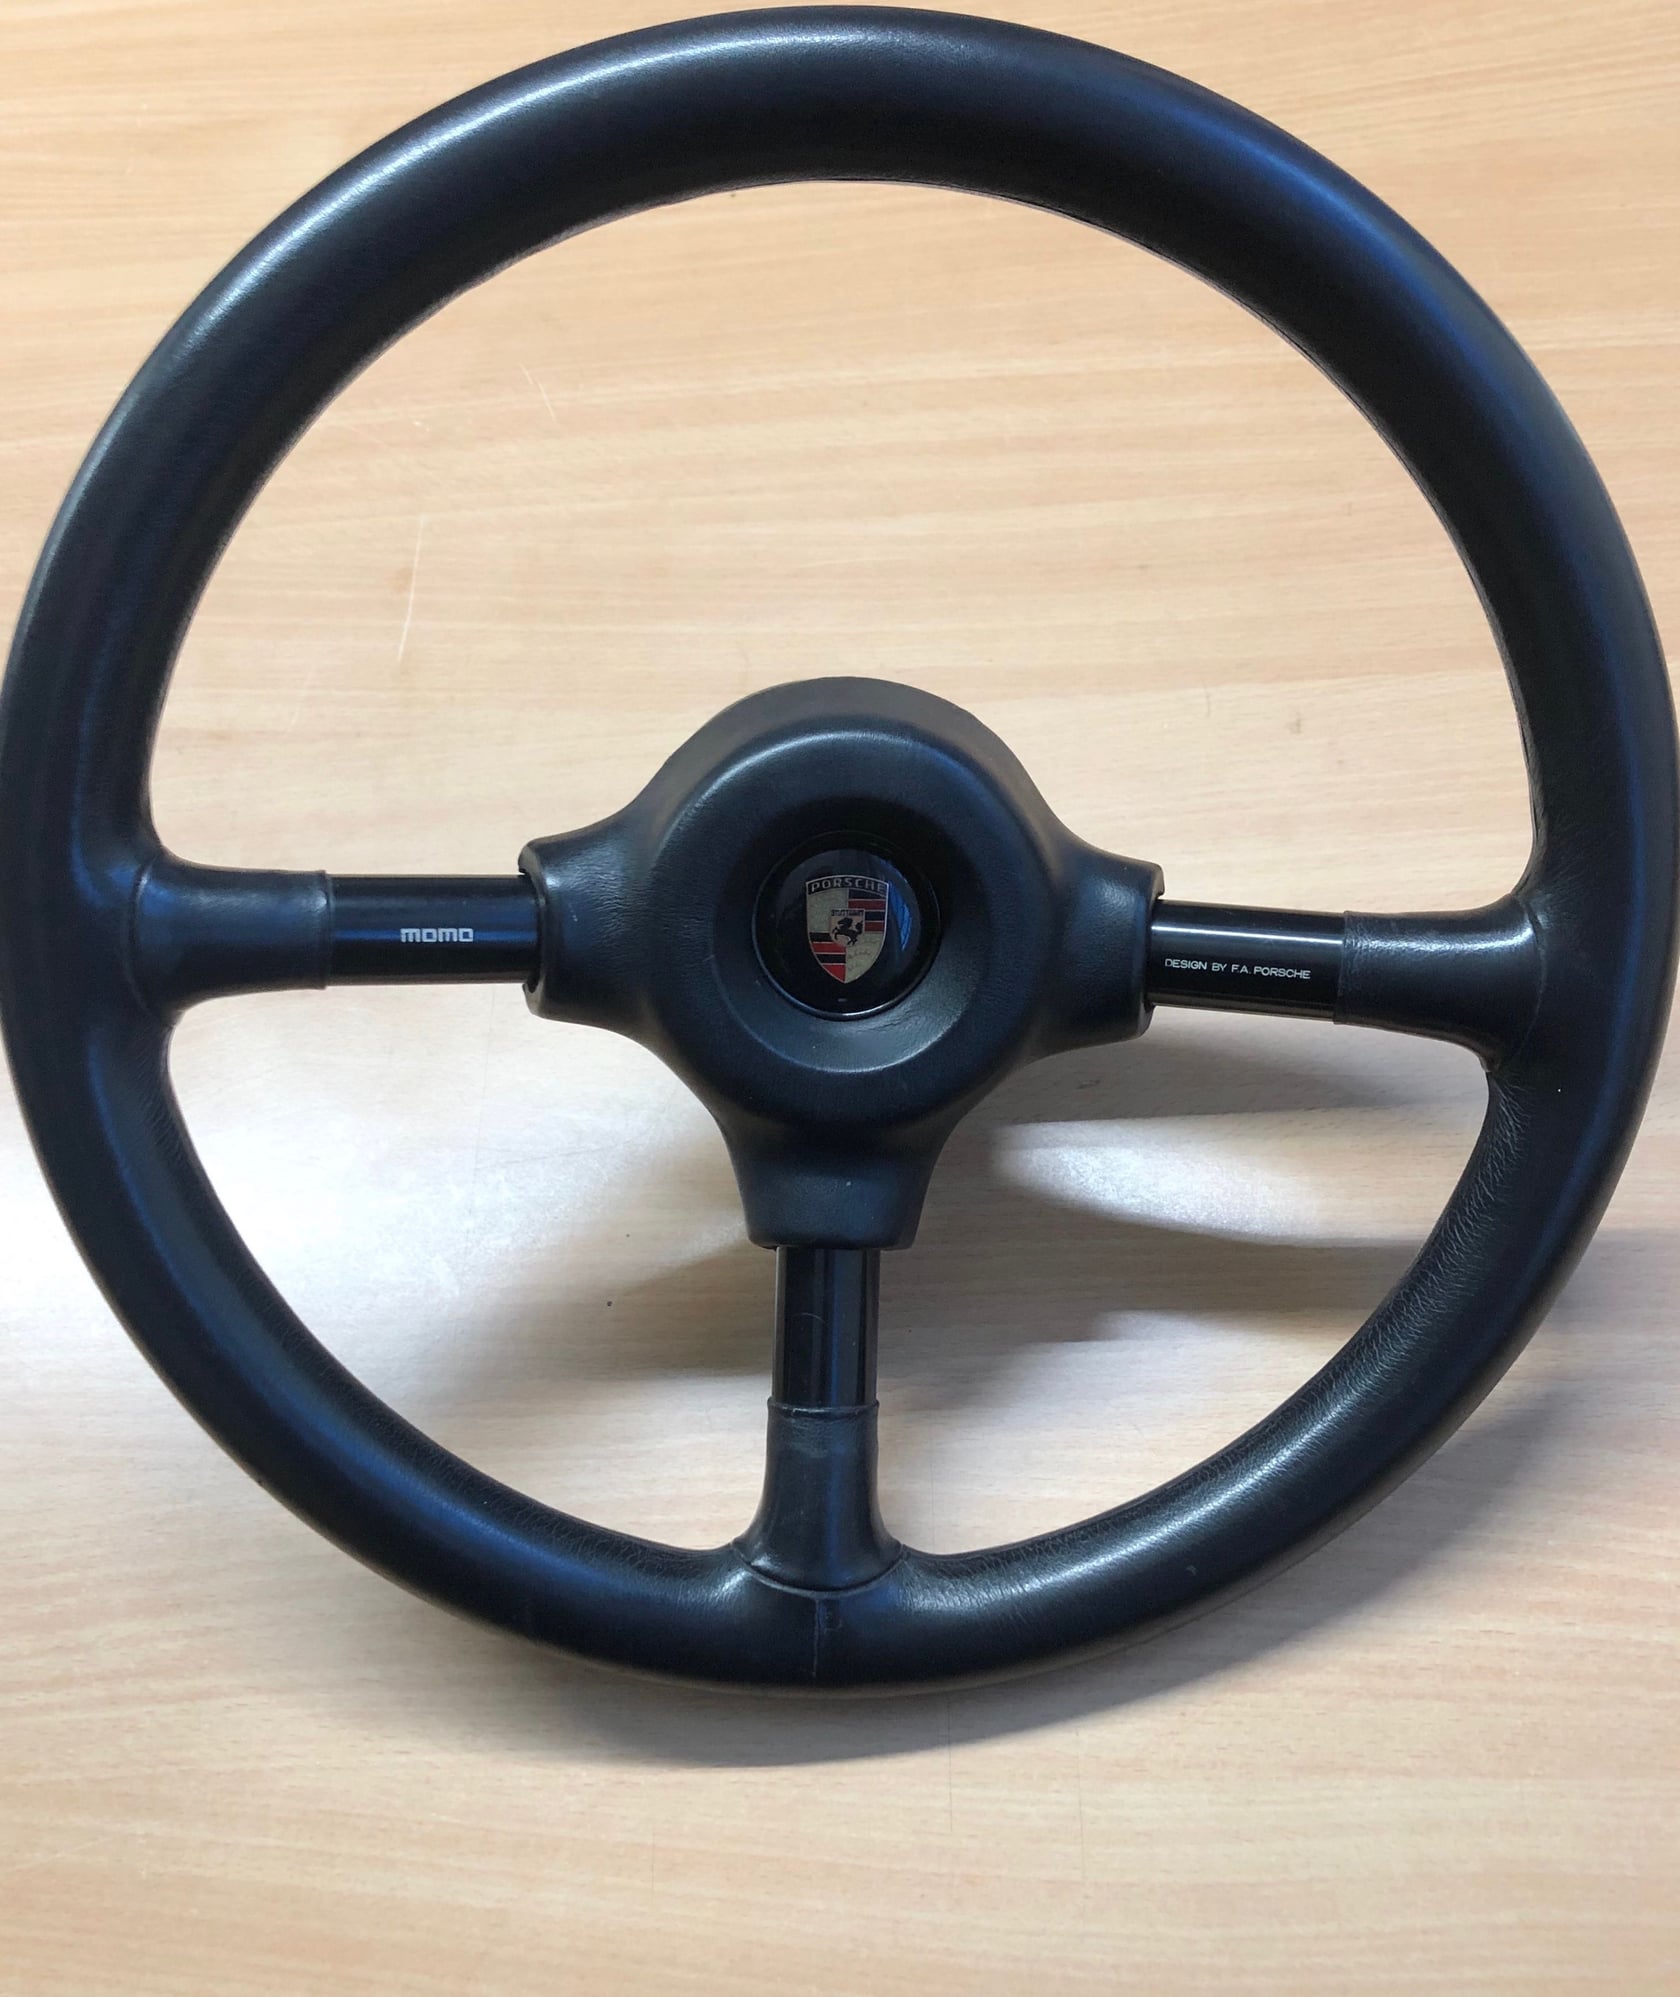 Interior/Upholstery - Momo Porsche Design Steering Wheel - Used - Doral, FL 33166, United States